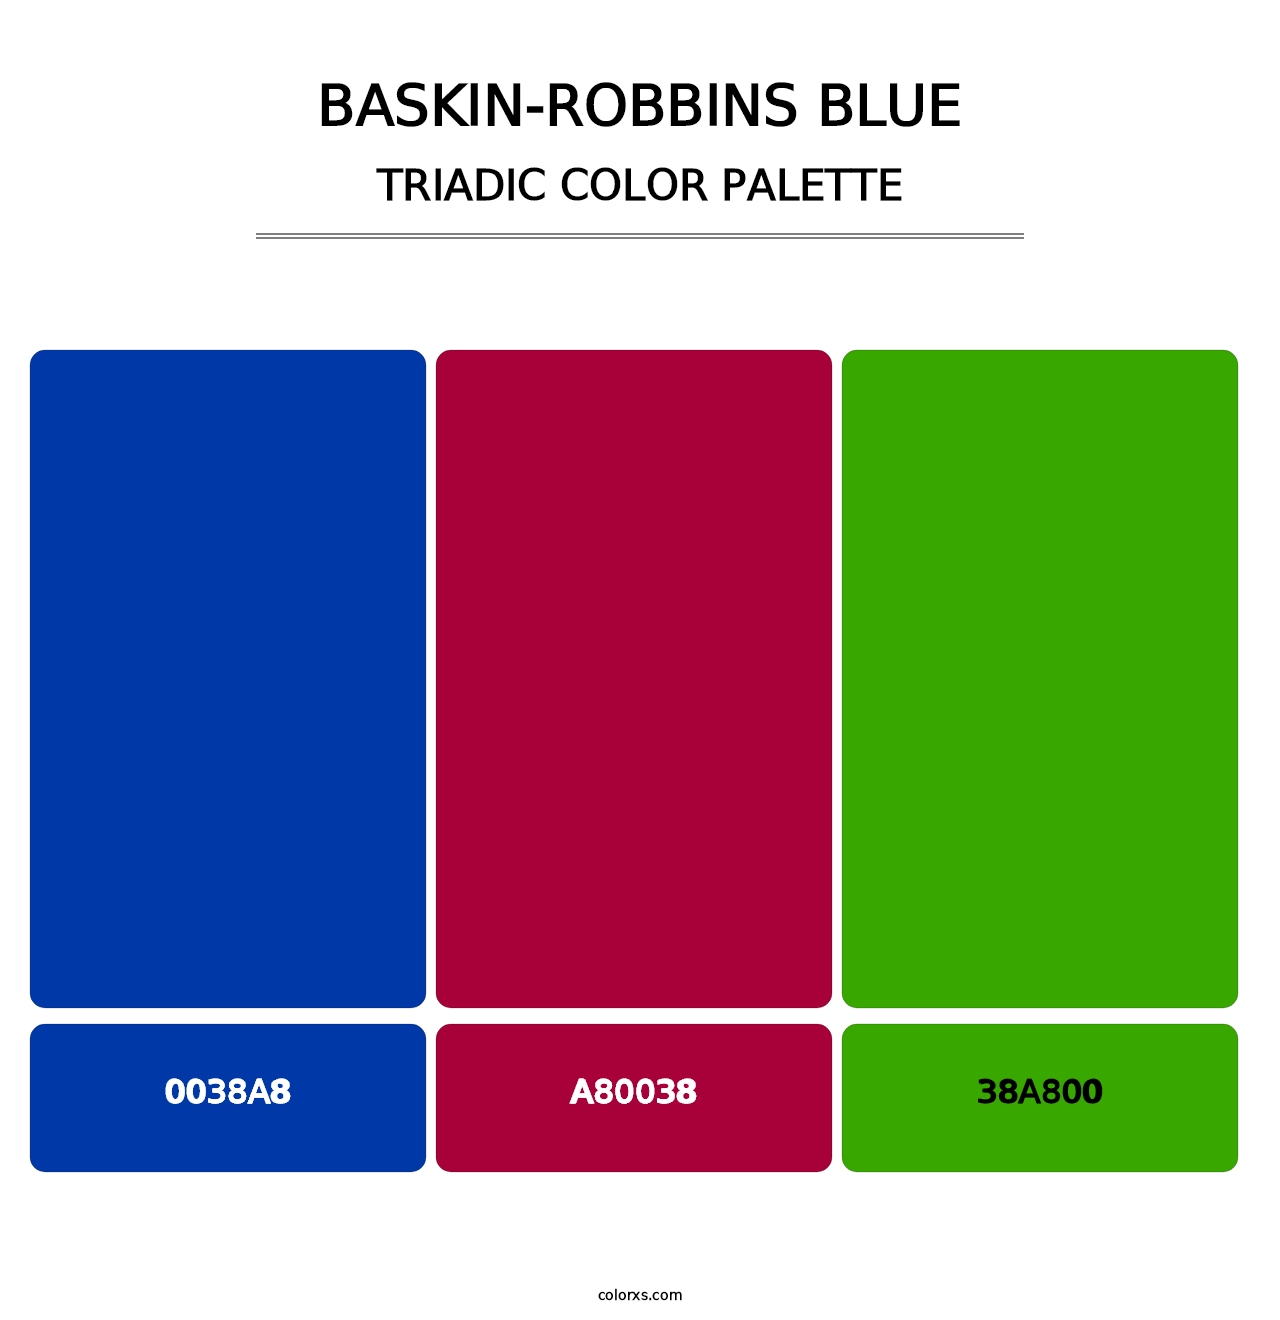 Baskin-Robbins Blue - Triadic Color Palette